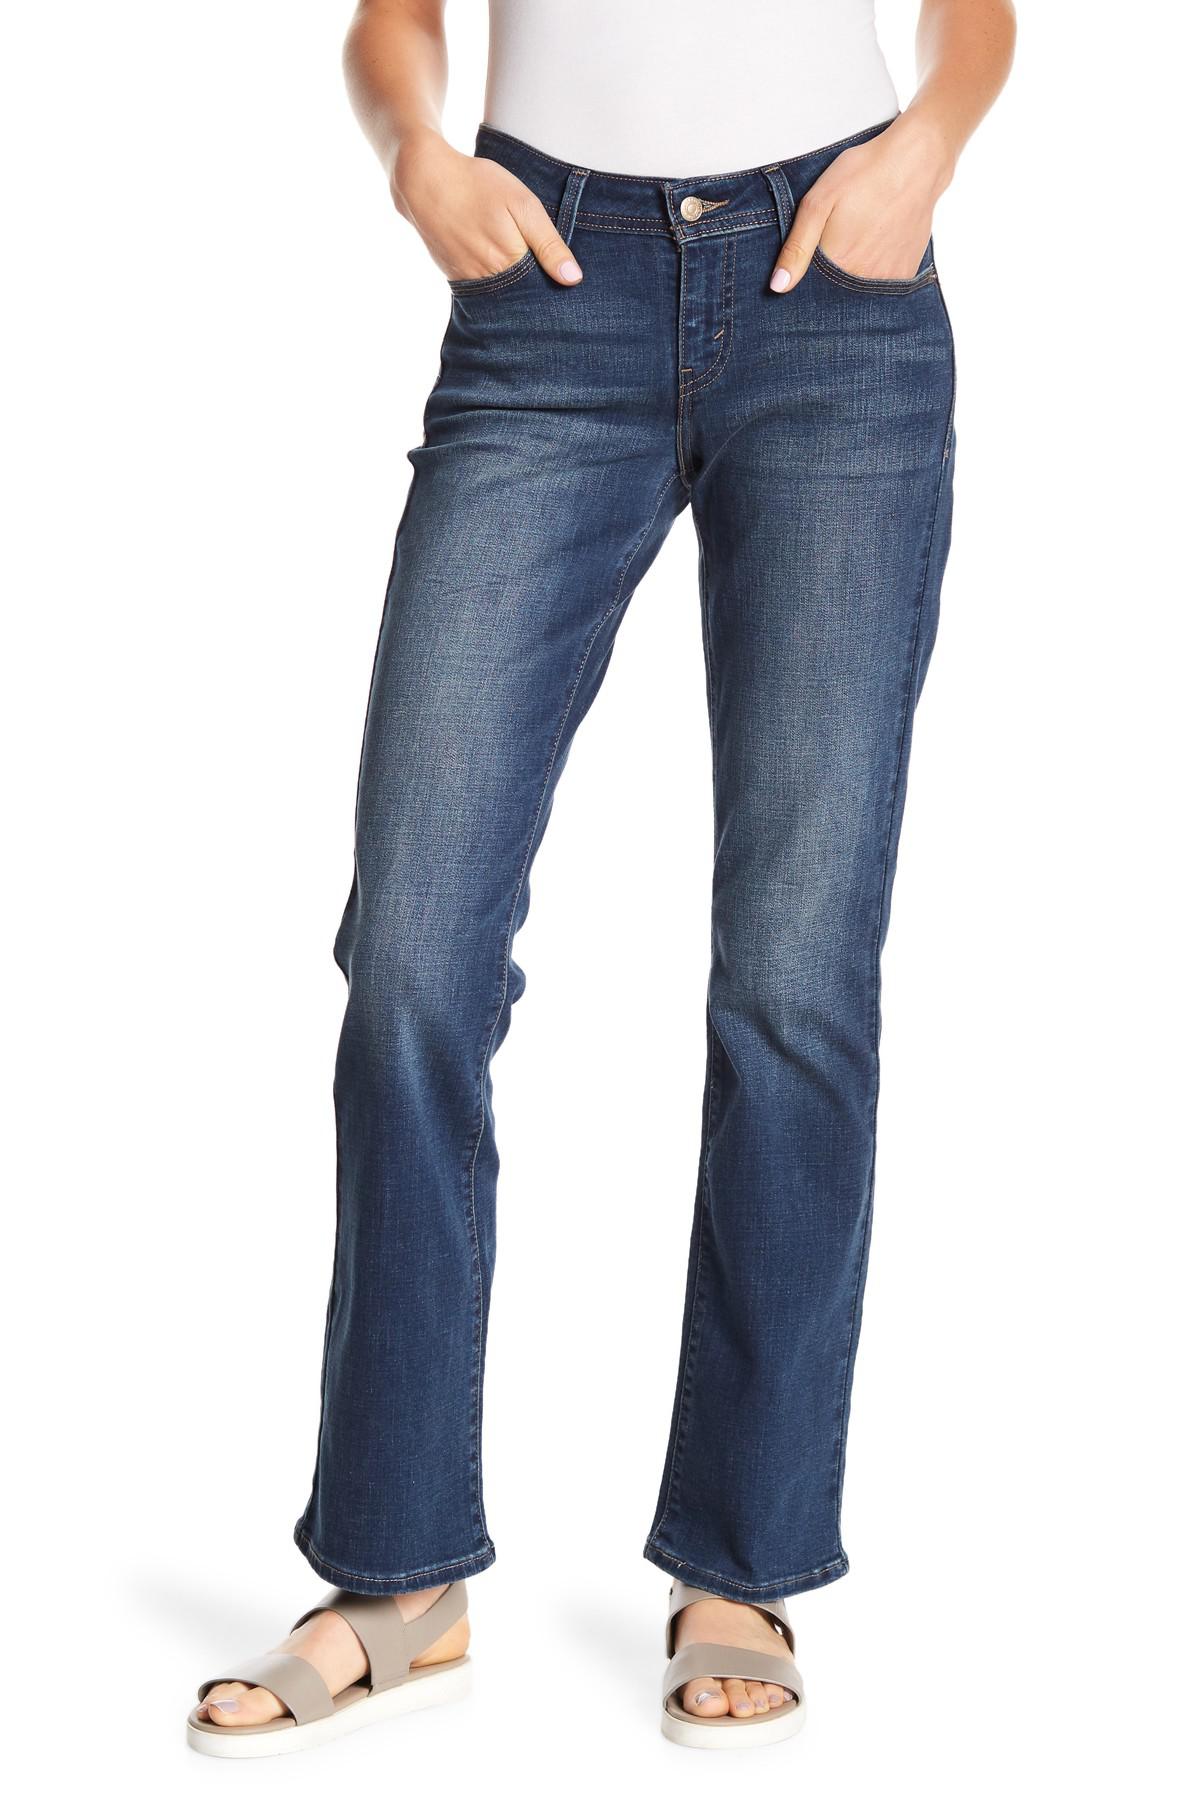 Levi's Denim 529 Curvy Style Bootcut Jeans in Blue - Lyst